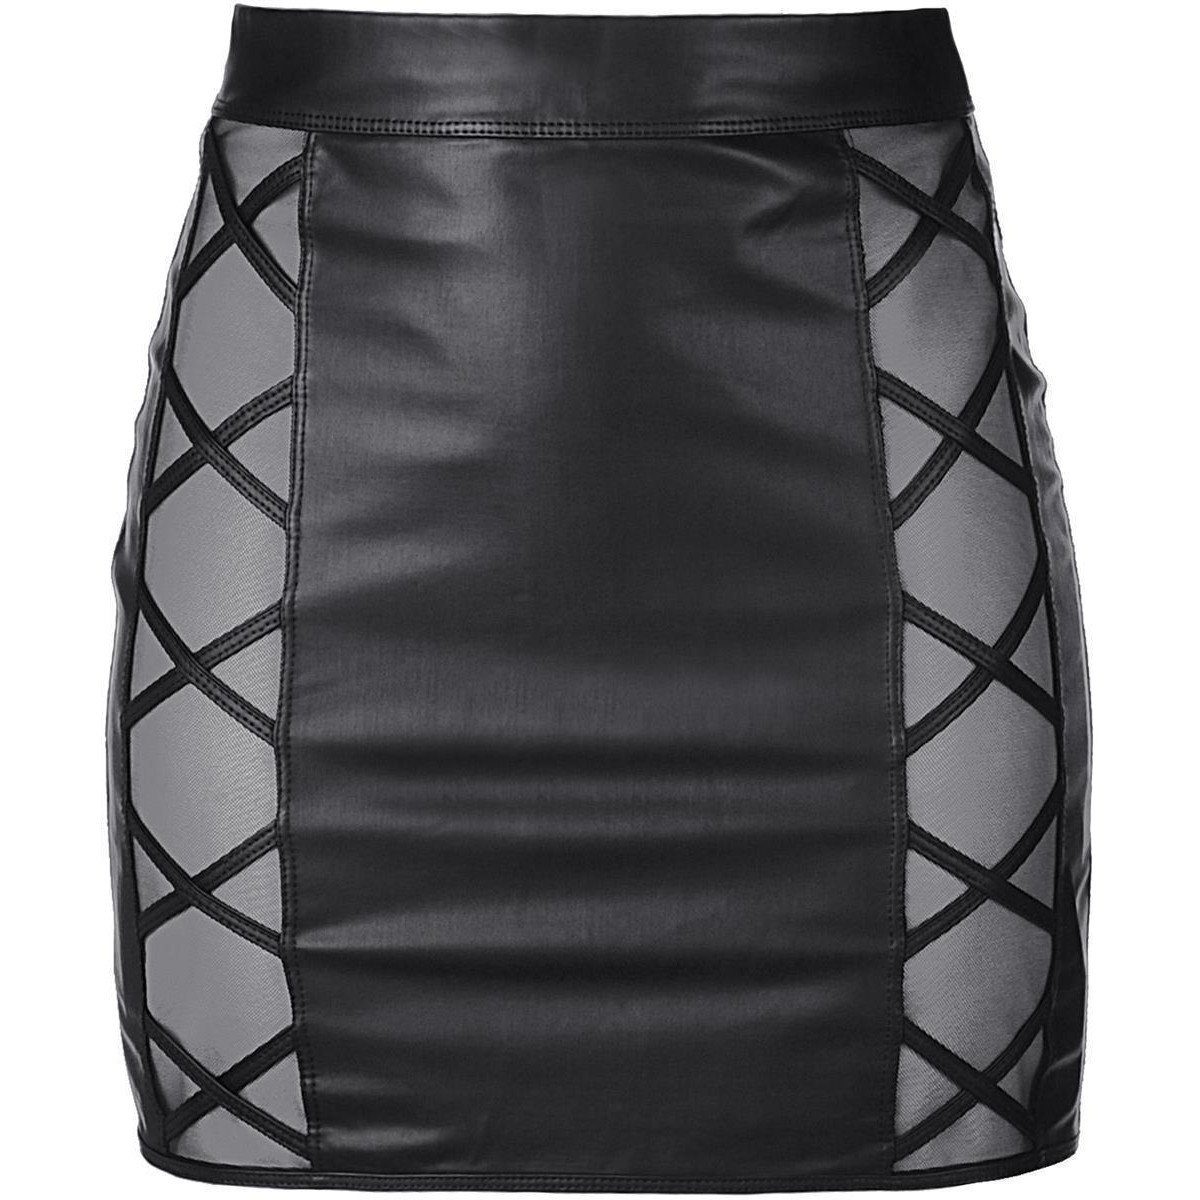 Axami Midirock V-9329 skirt - black (L,M,S,XL)